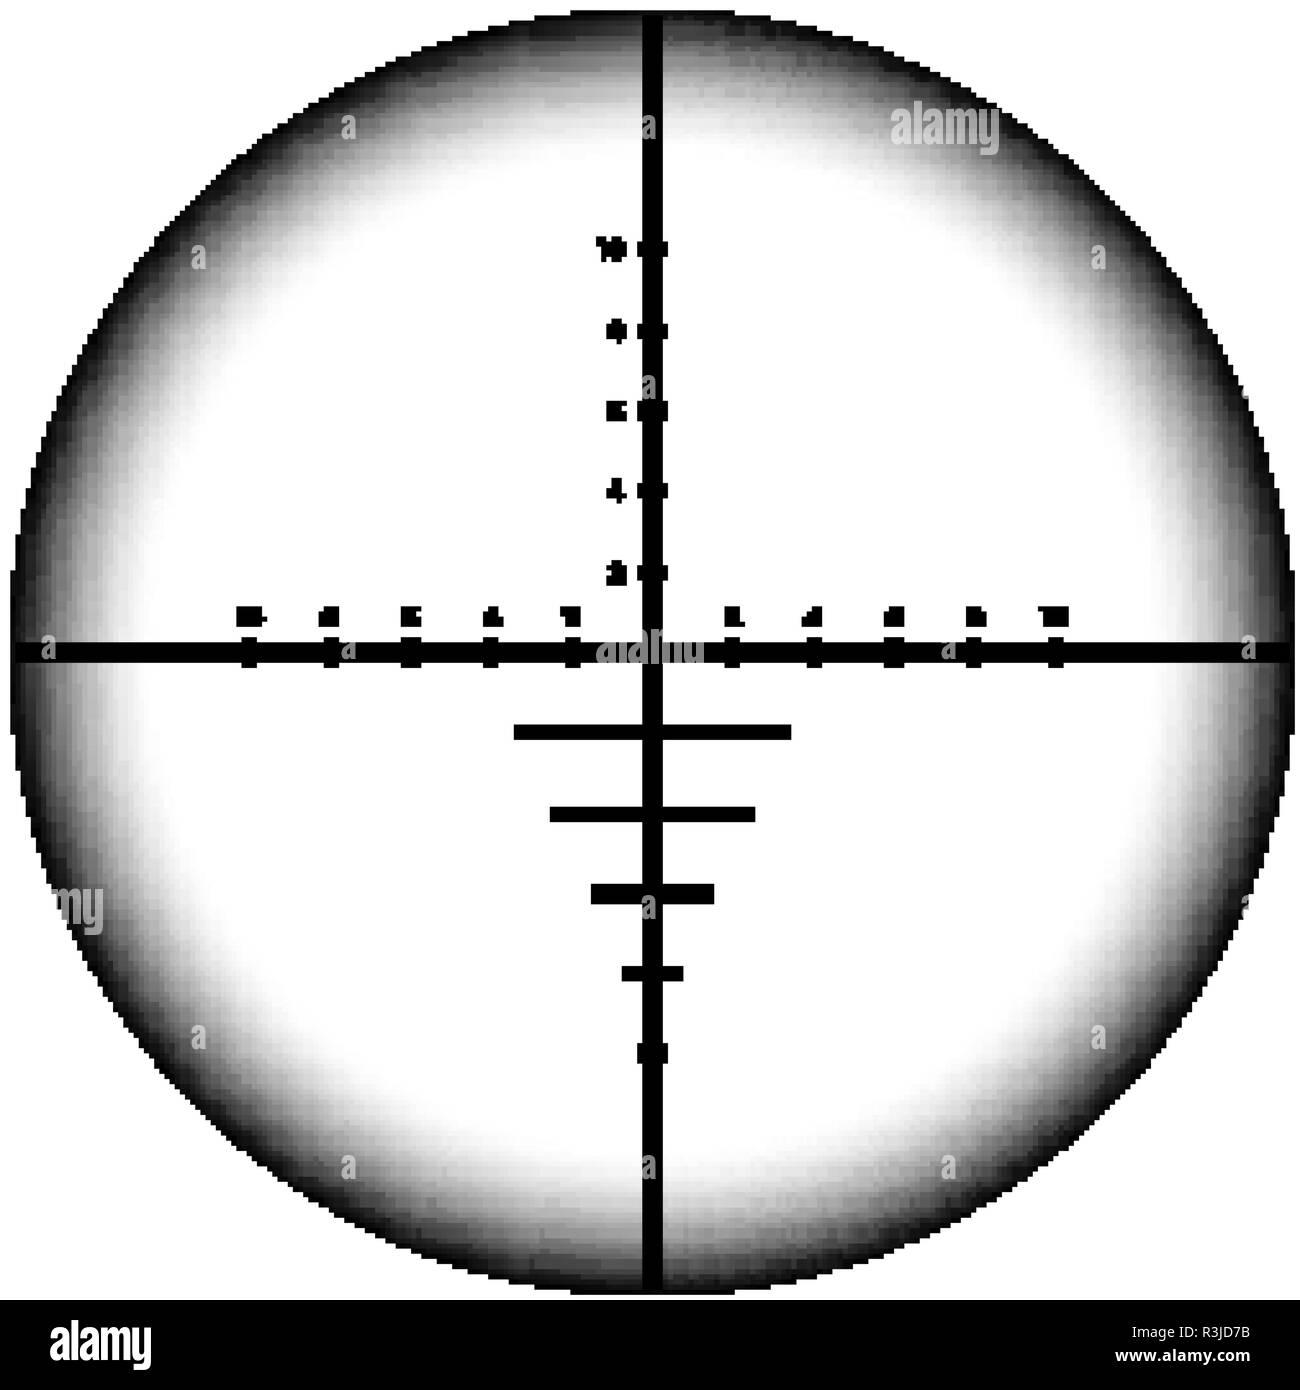 Military sniper rifle scope collimator sight icon Stock Vector